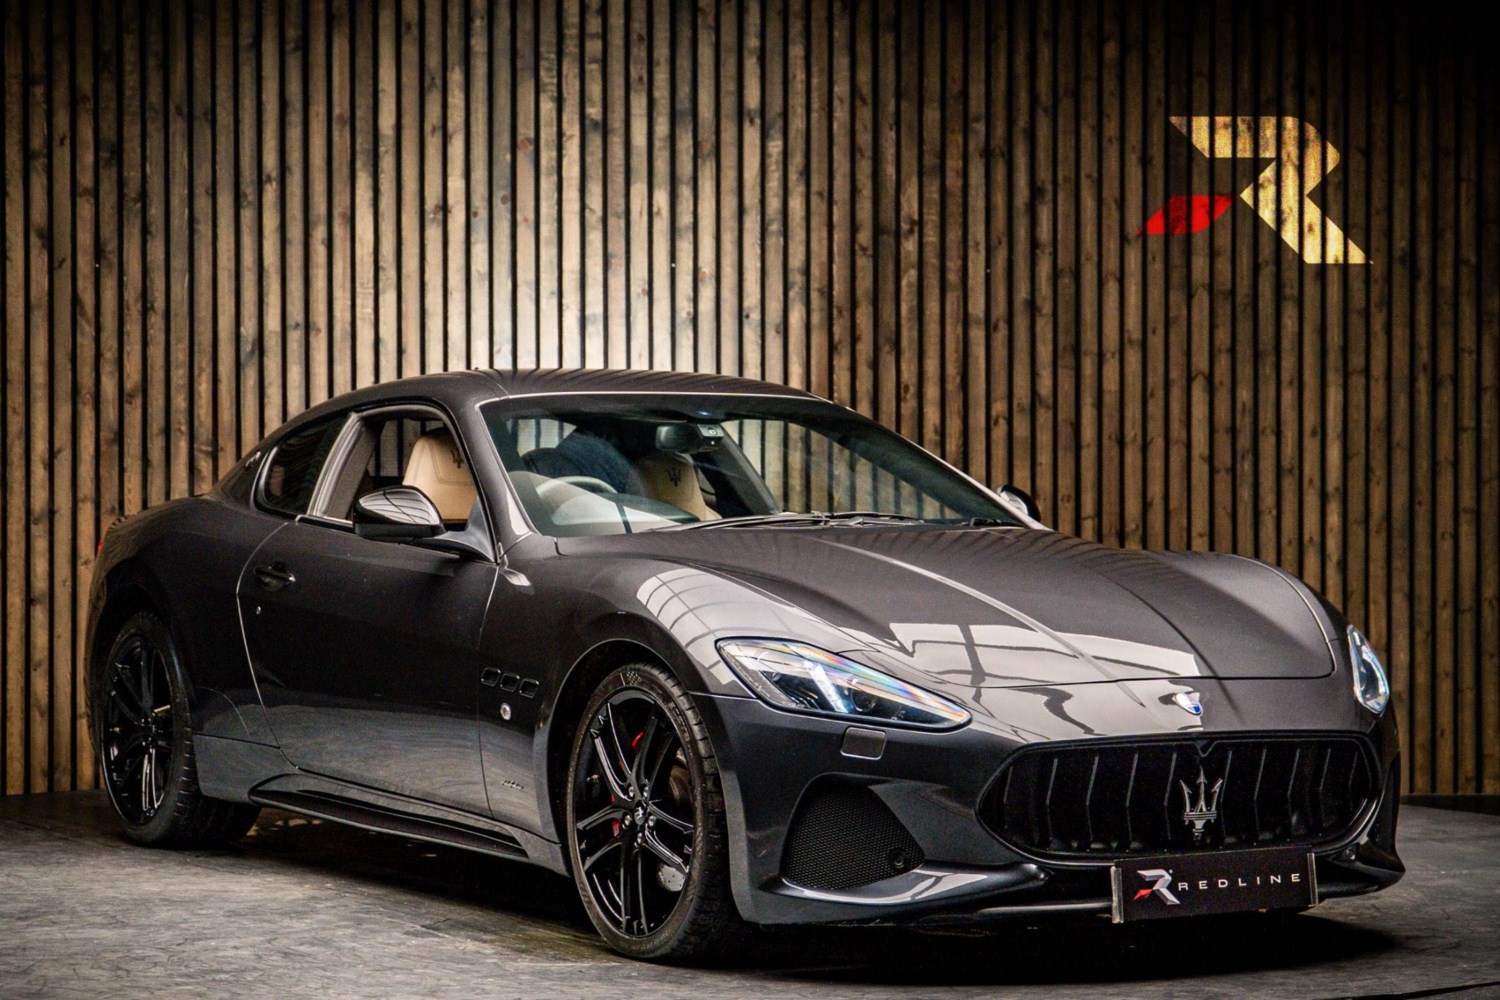 Maserati Granturismo Listing Image